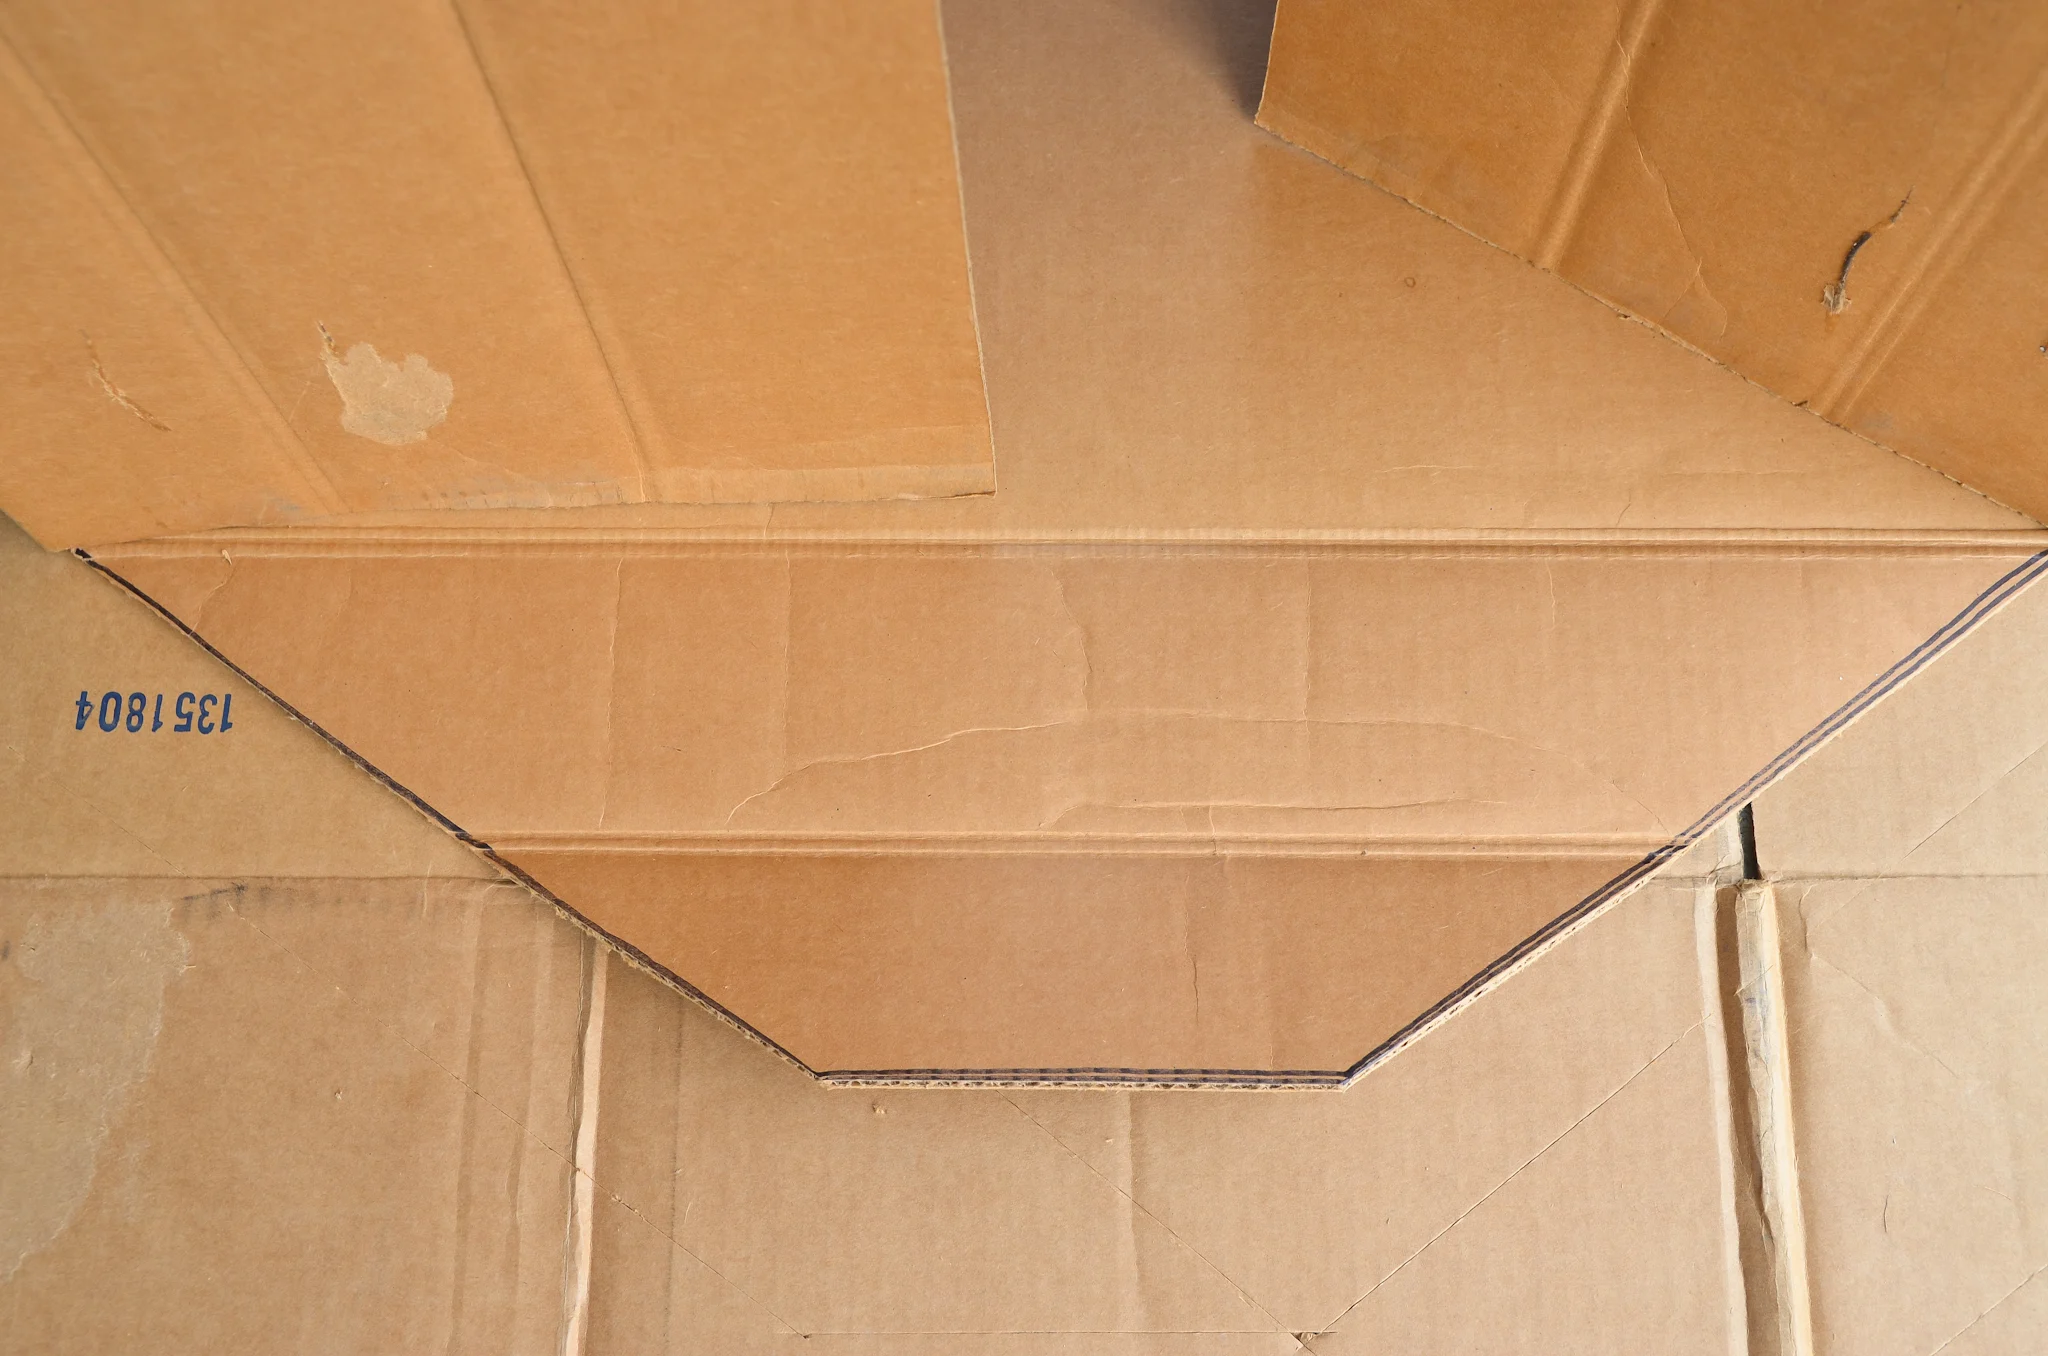 DIY Cardboard Box Playhouse Instructions